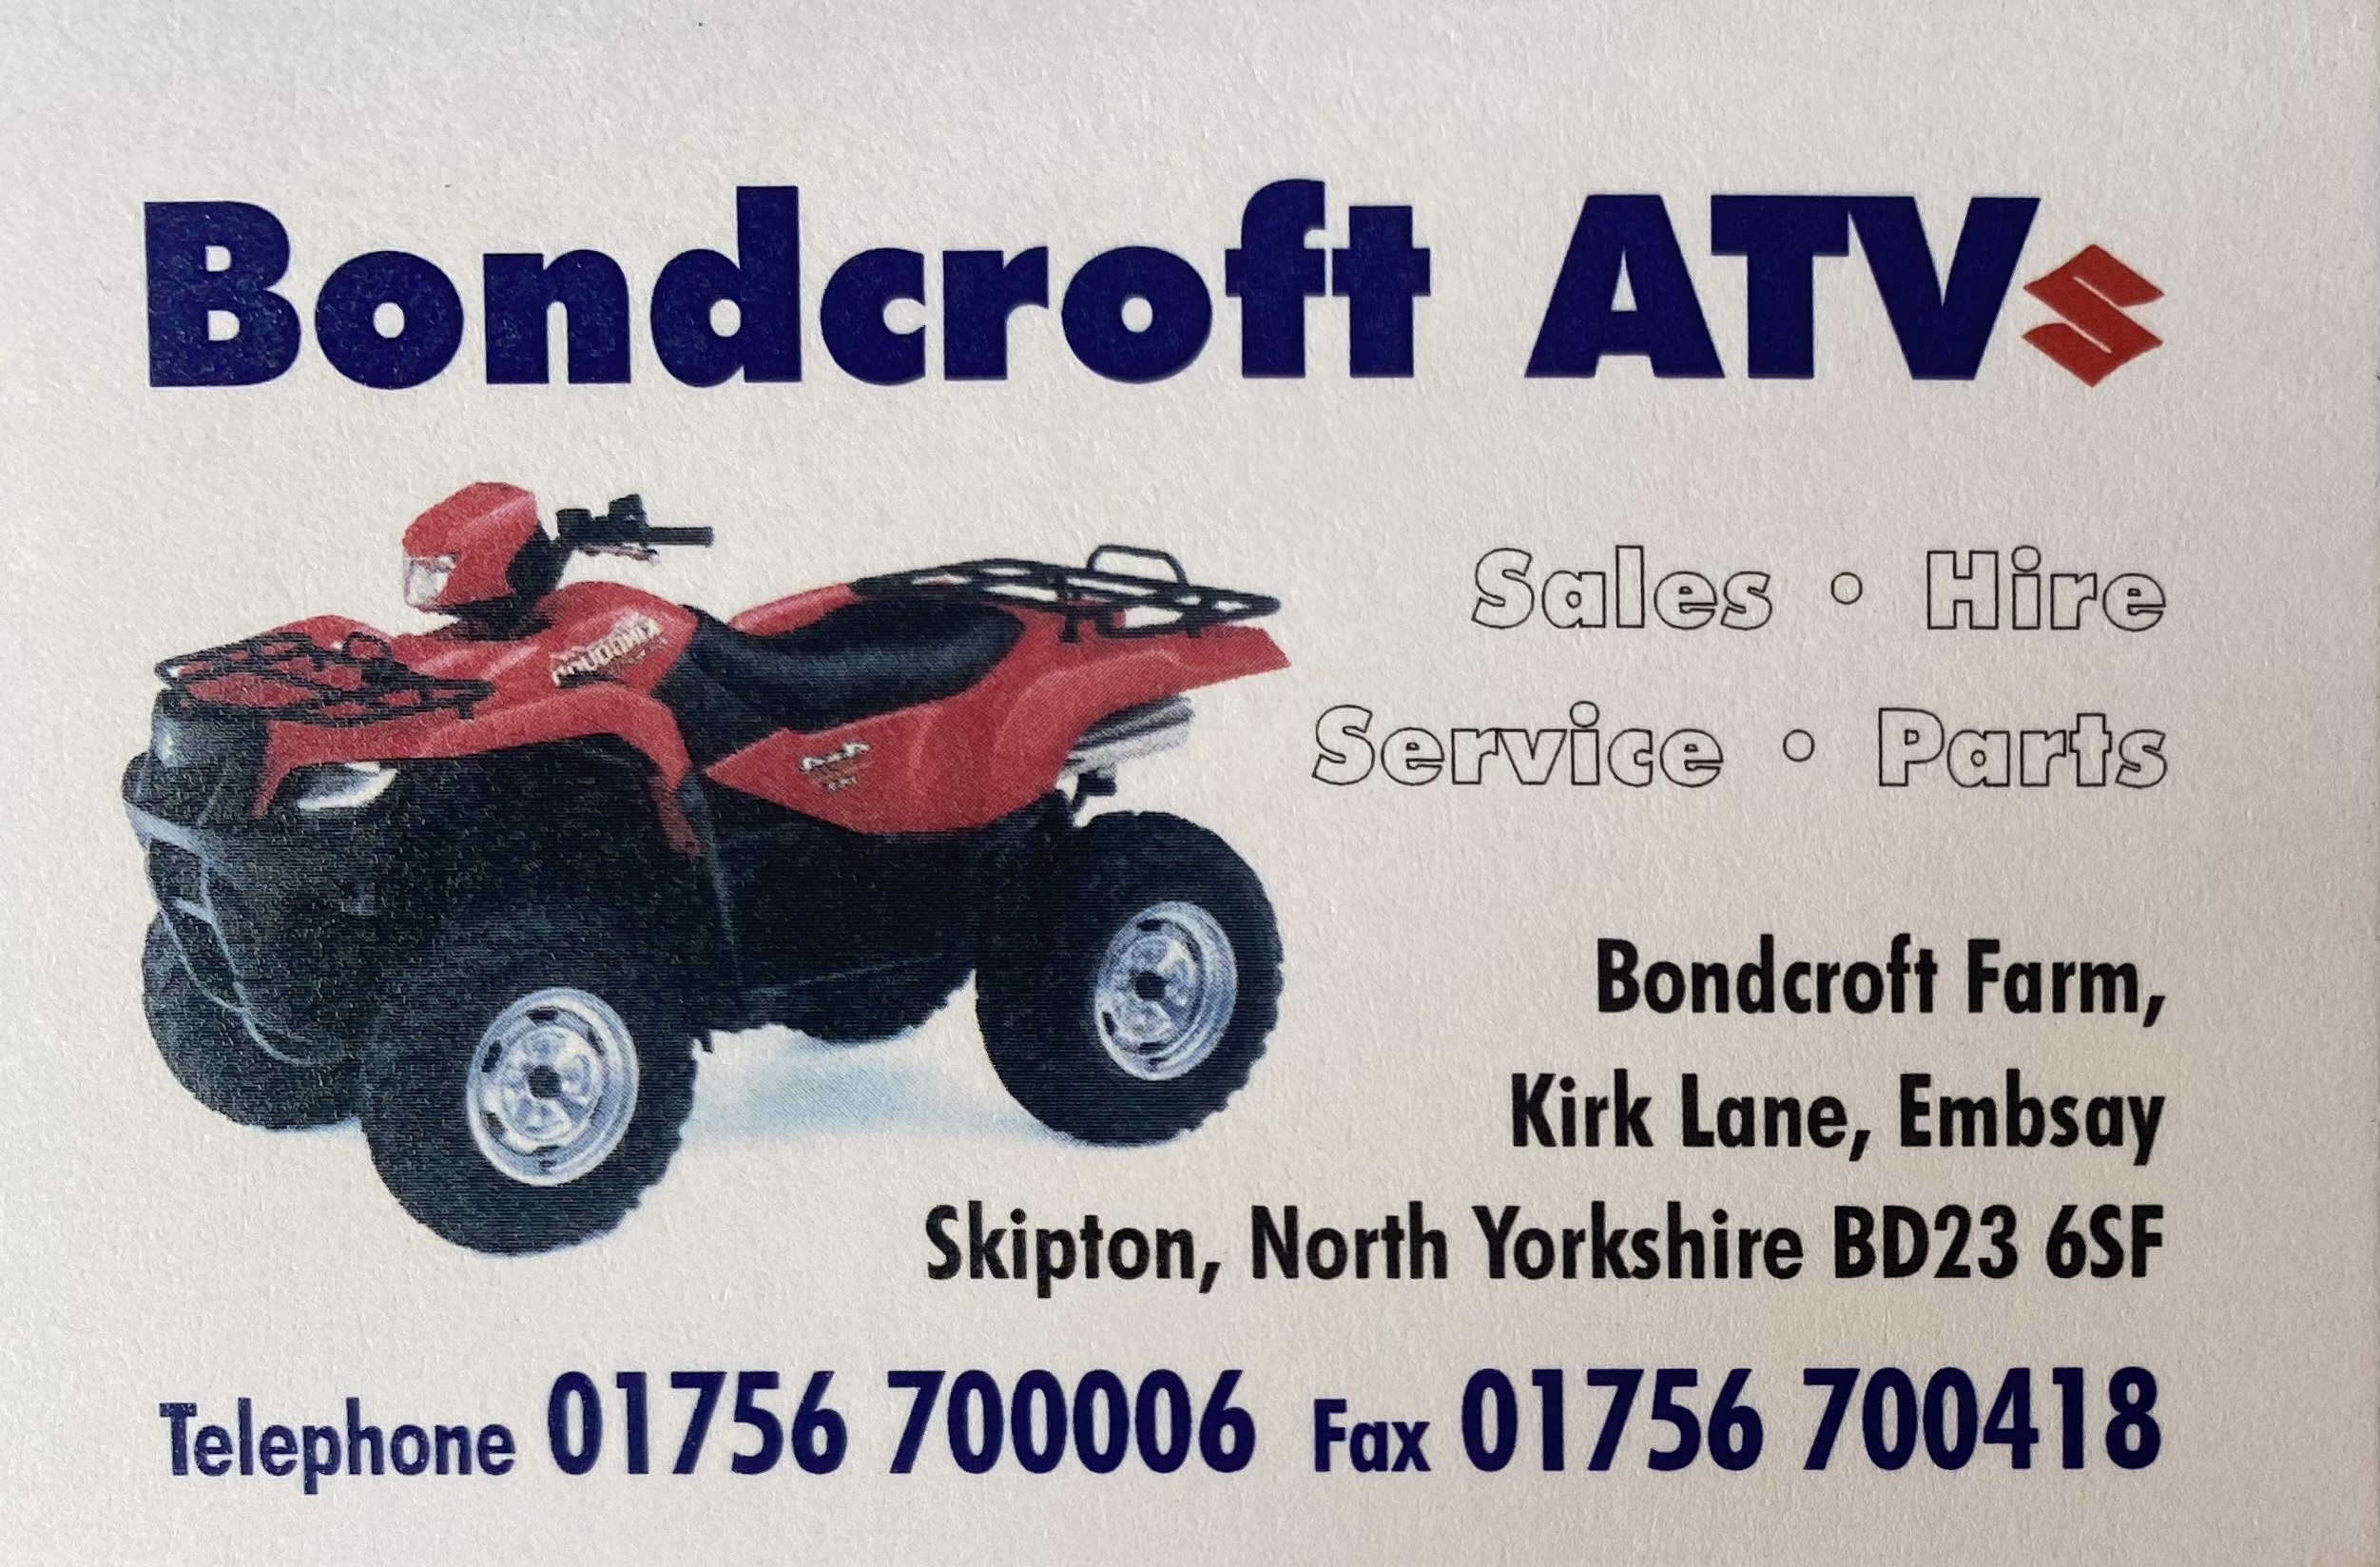 Bondcroft ATVs Sponsor the British Cross Country Championship 2021